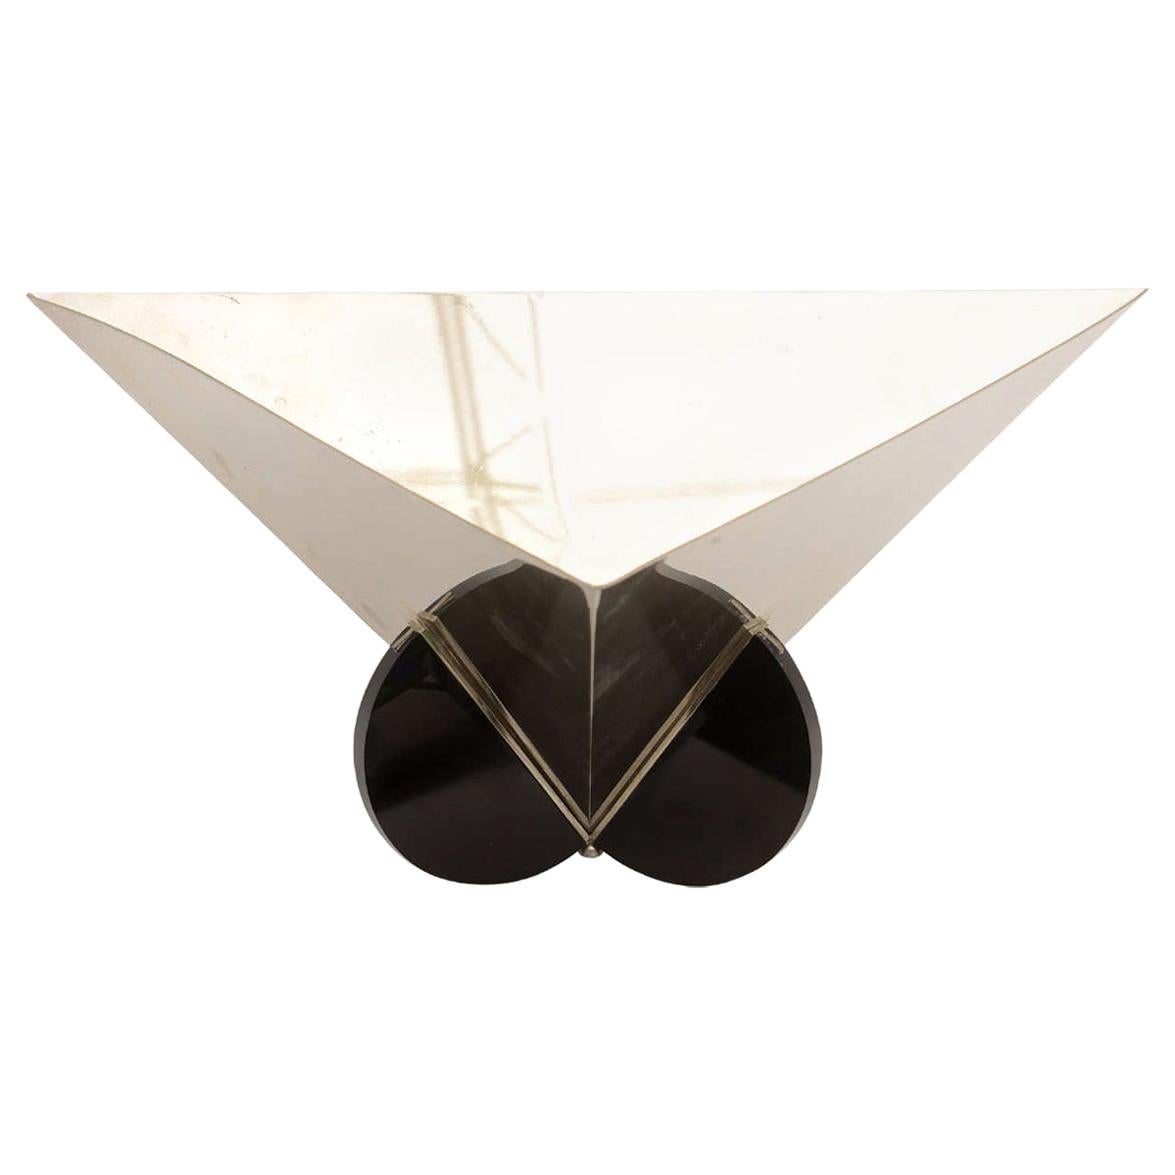 Stainless Steel and Black Resin Modernist Bowl, Italian